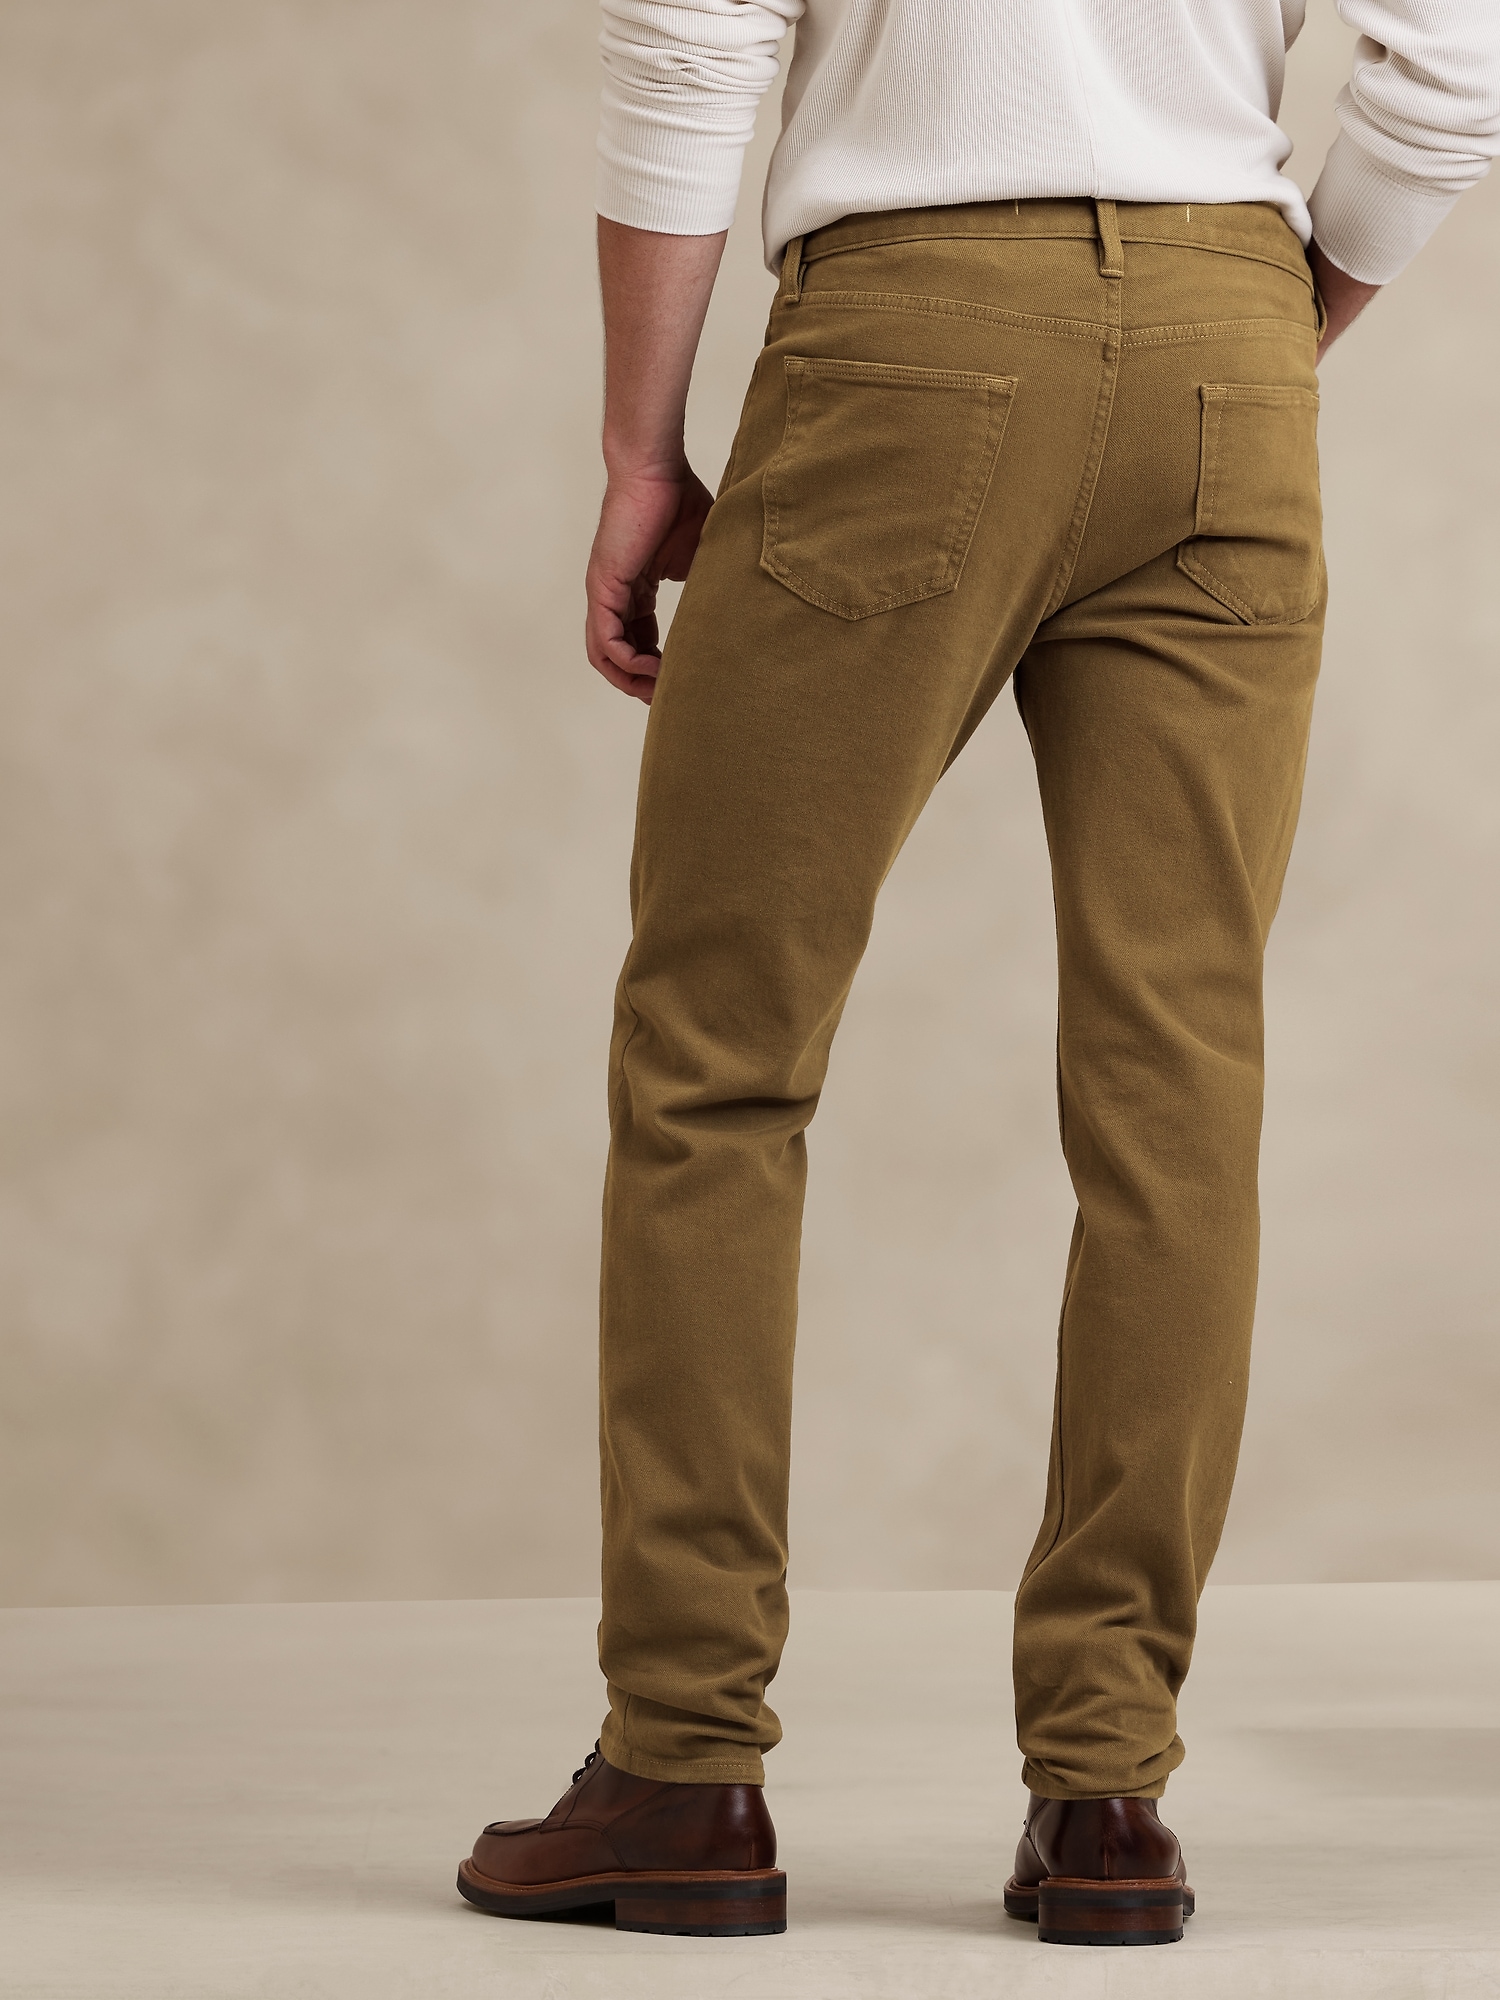 NEW!!! Banana Republic Men's 5 Pocket Slim Fit Pant & Size 32x30